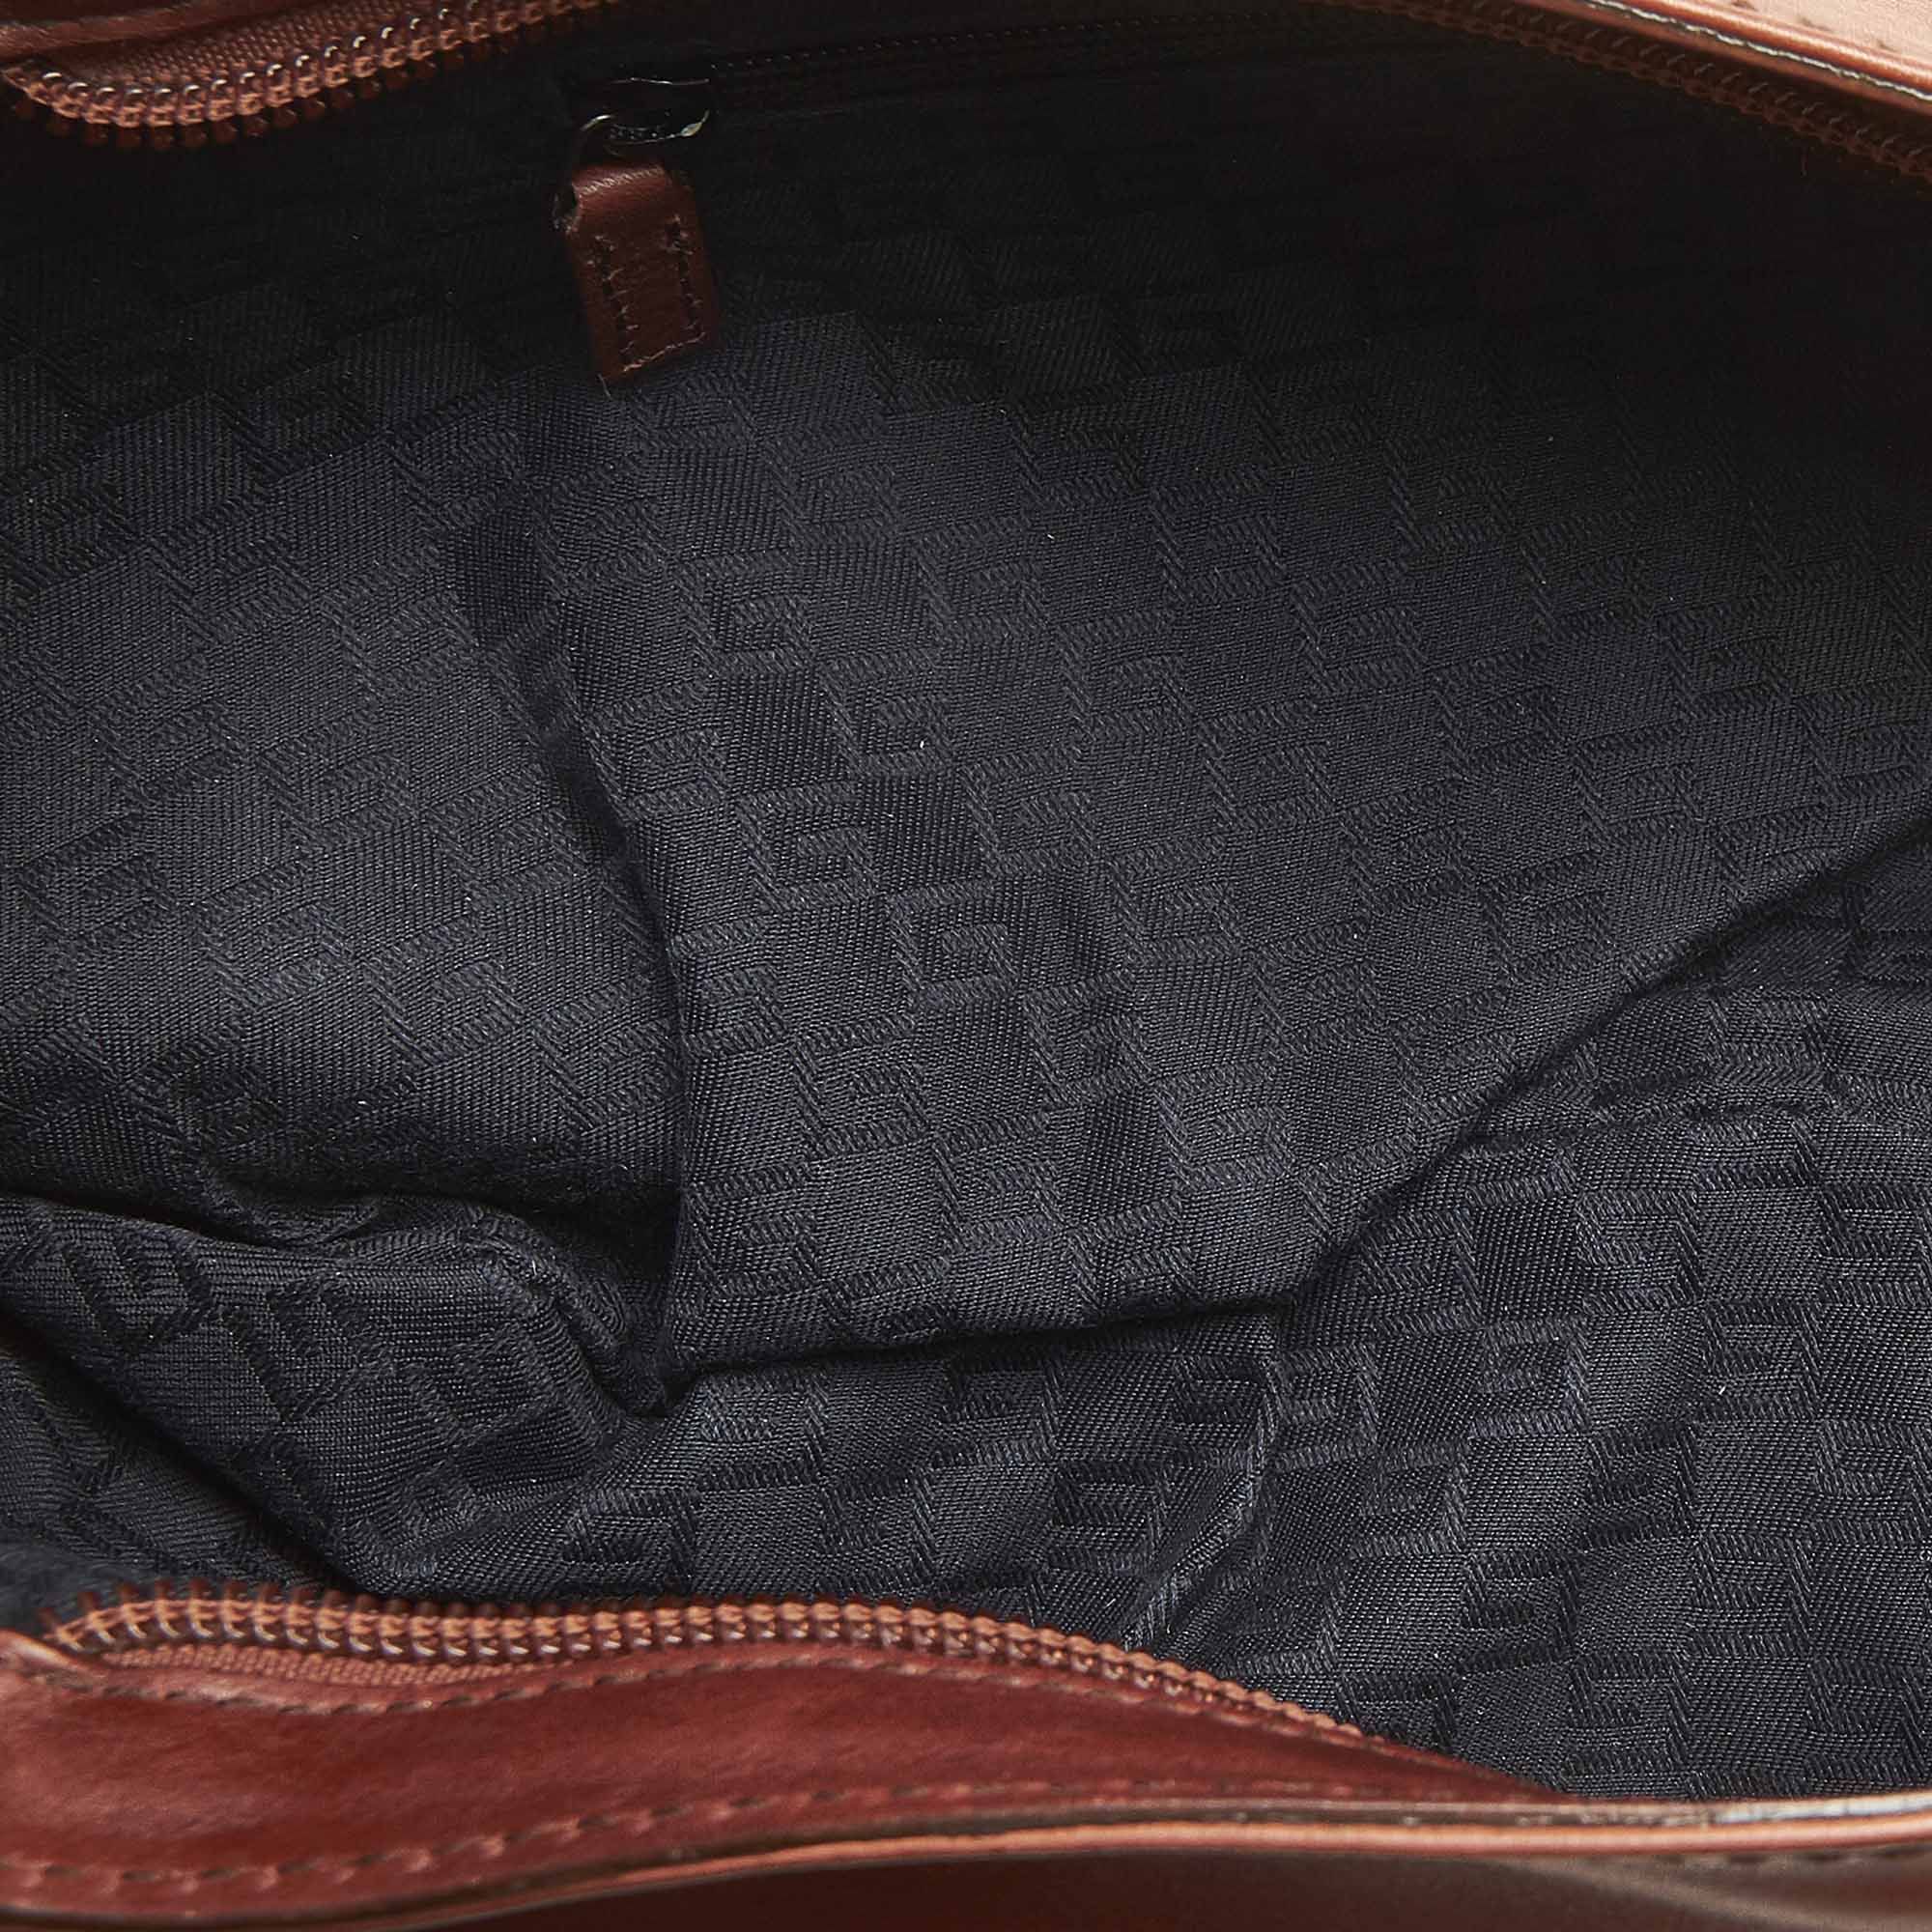 Vintage Gucci Leather Clutch Bag Brown